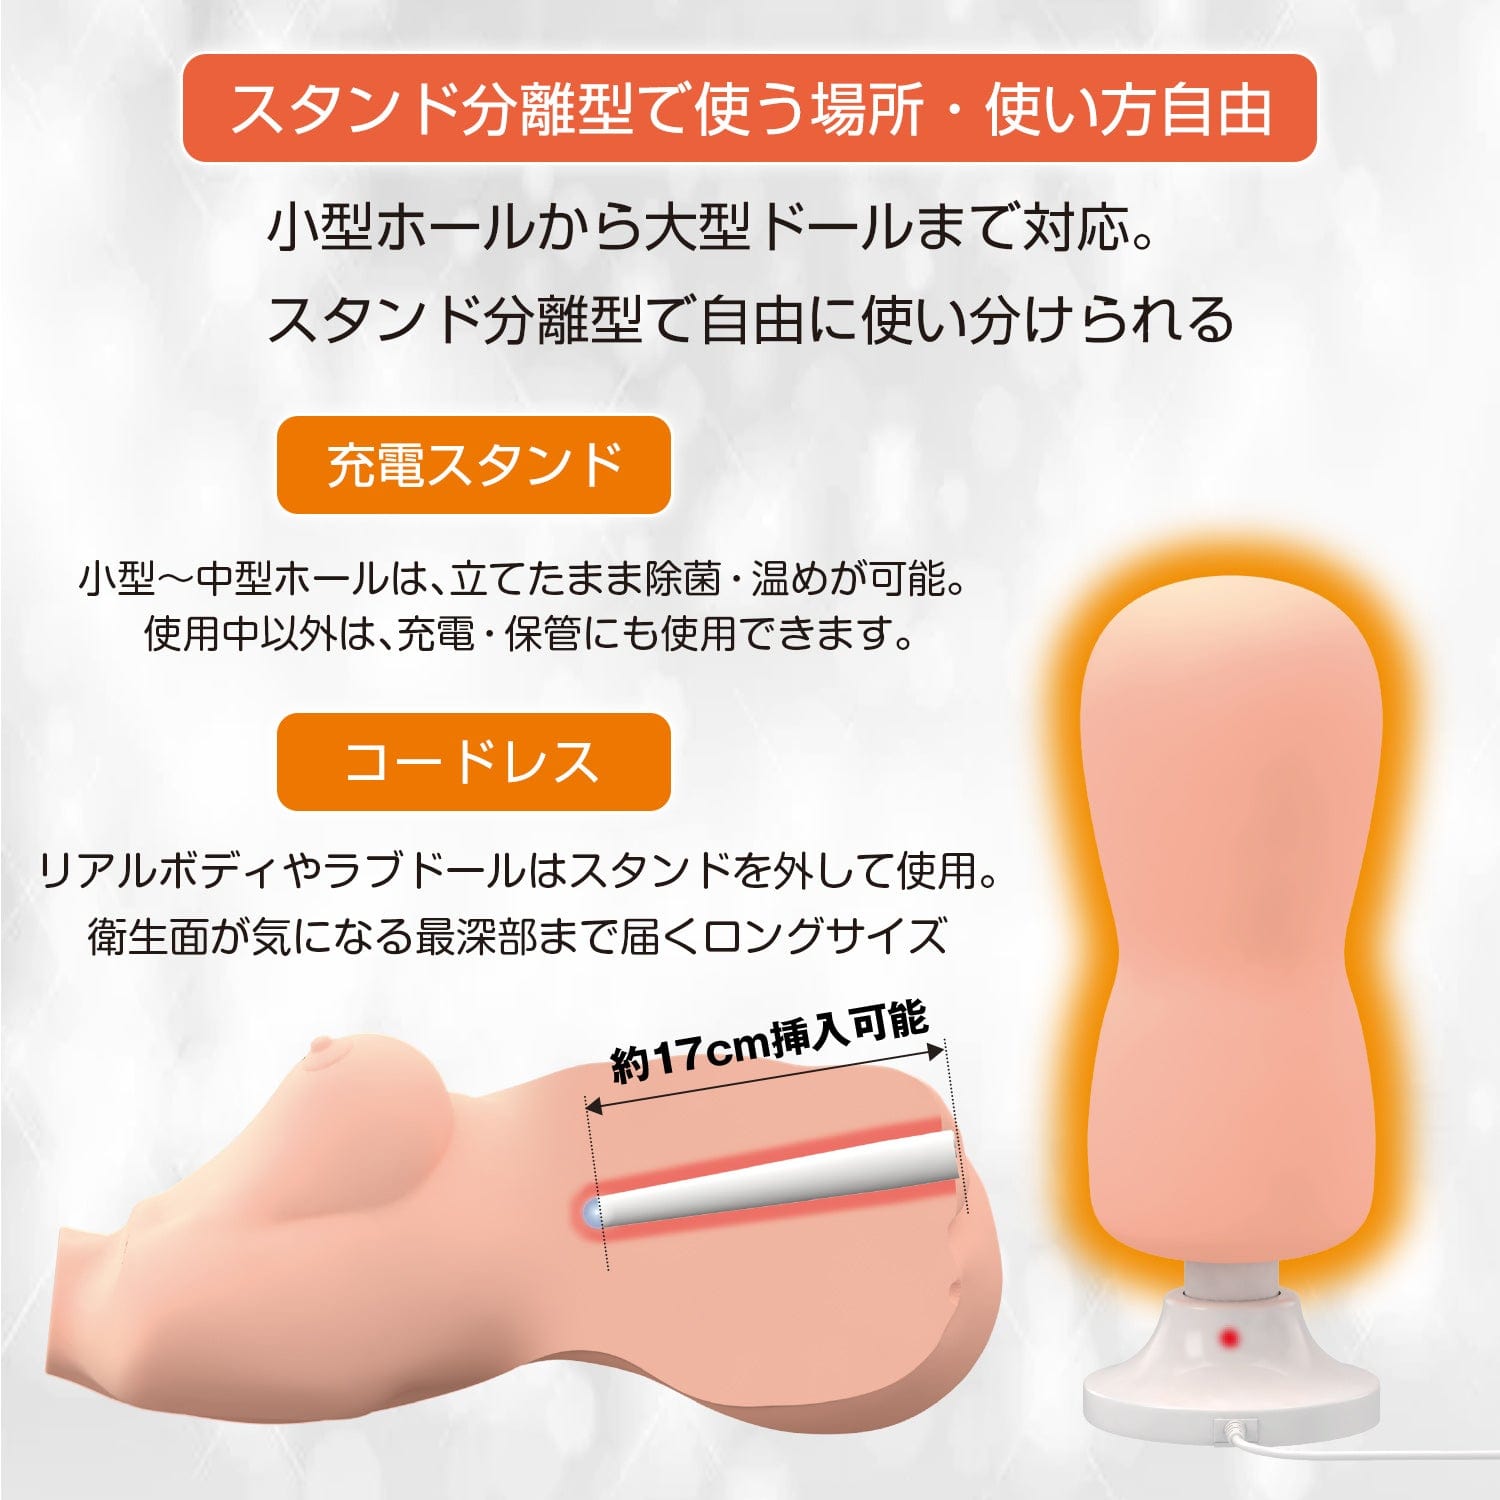 SSI Japan - UVC Masturbator USB Rechargeable Onahole Warmer with Stand Warmer 4560344563181 CherryAffairs